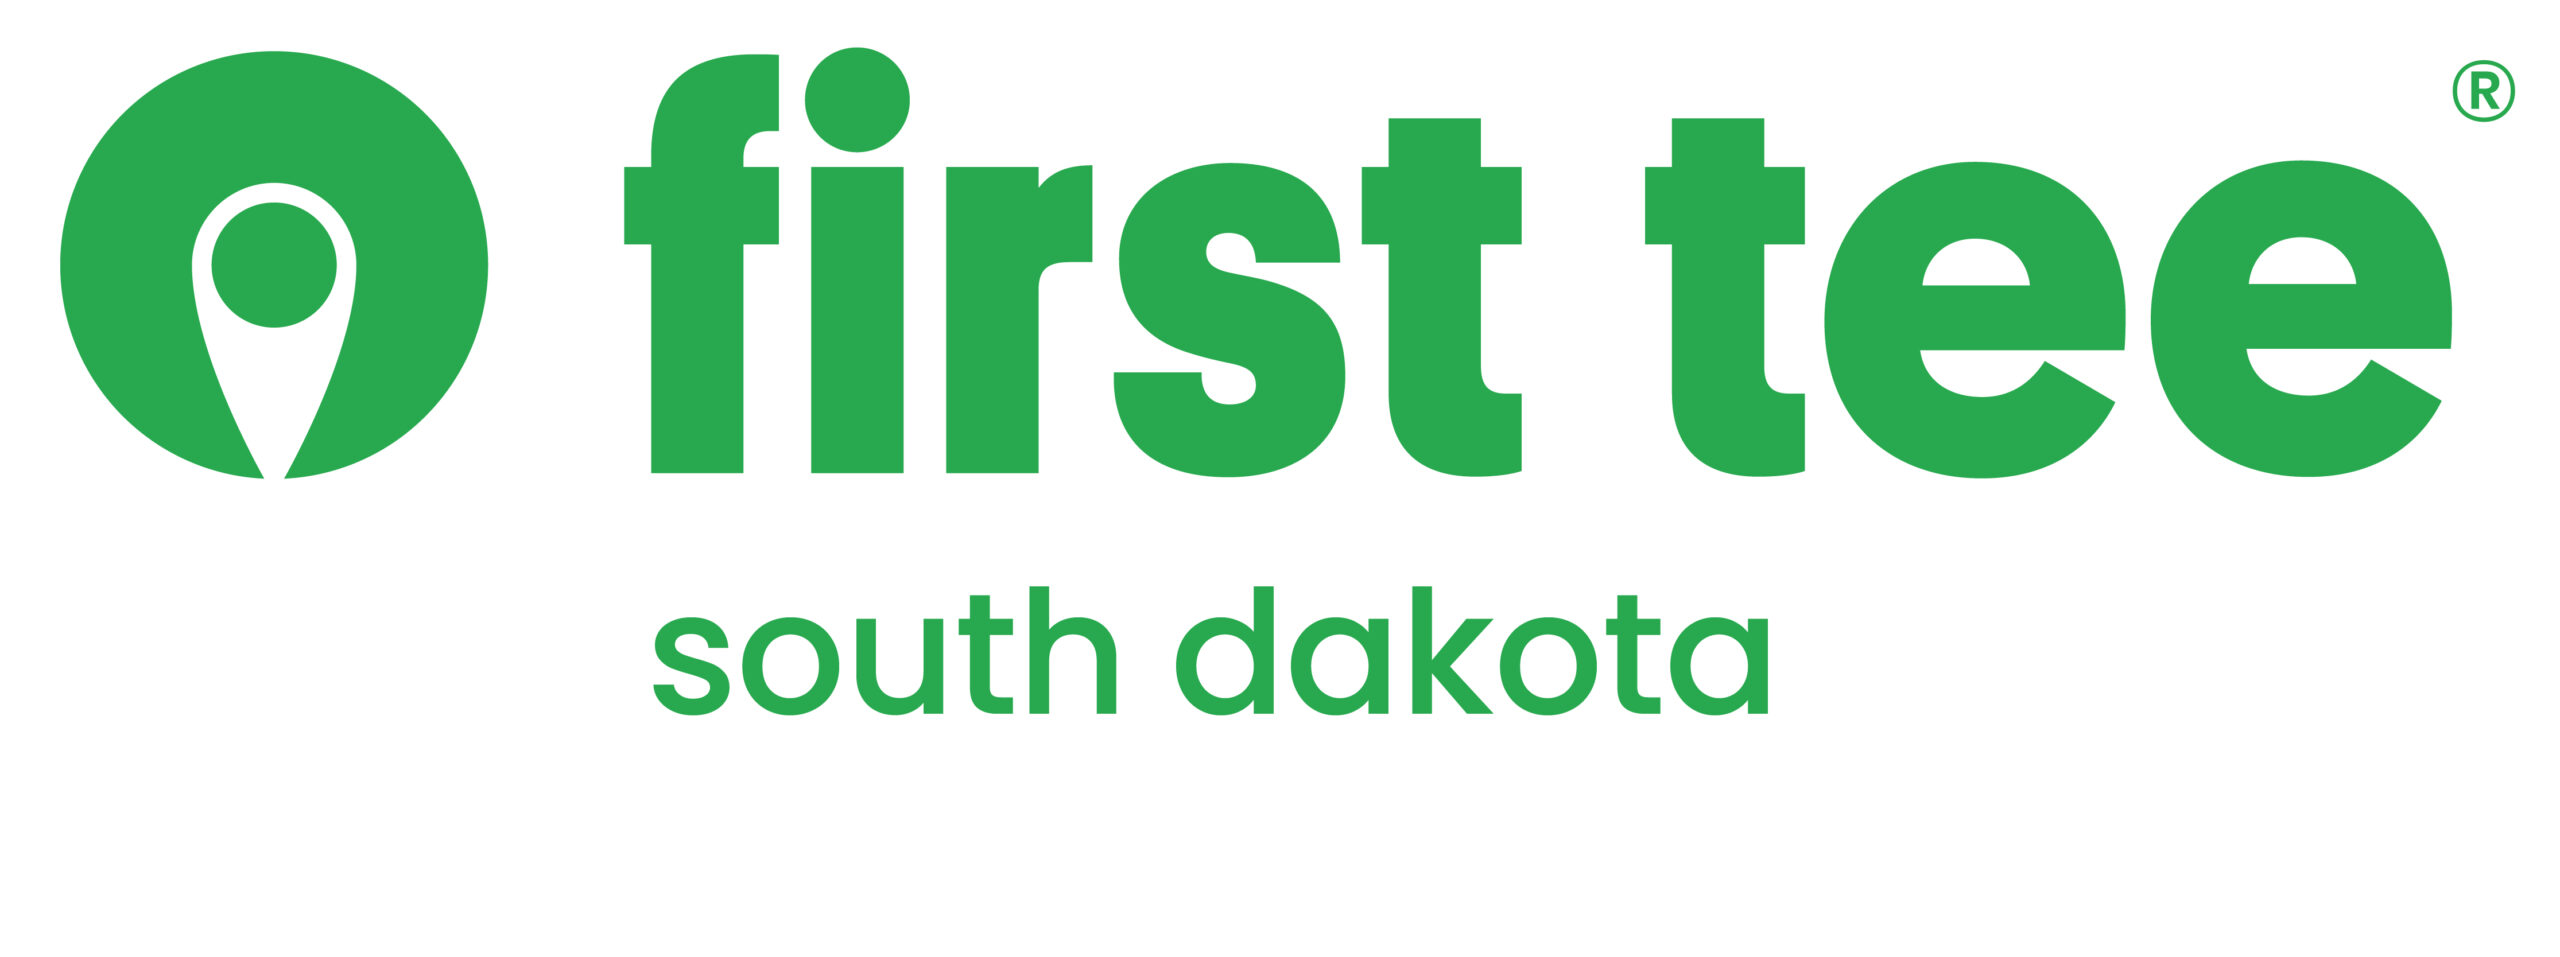 First Tee – South Dakota